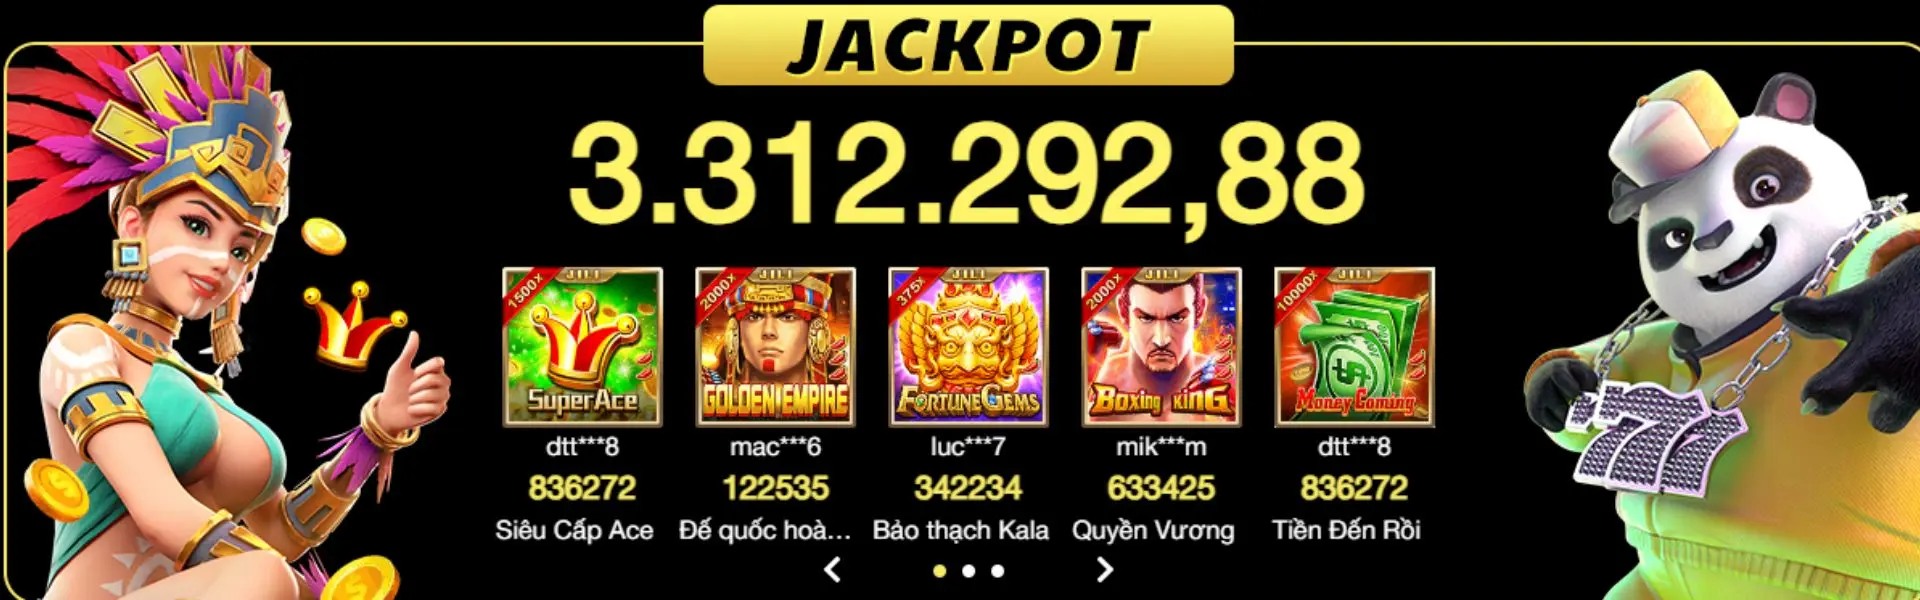 jackpot-slotgame-win55